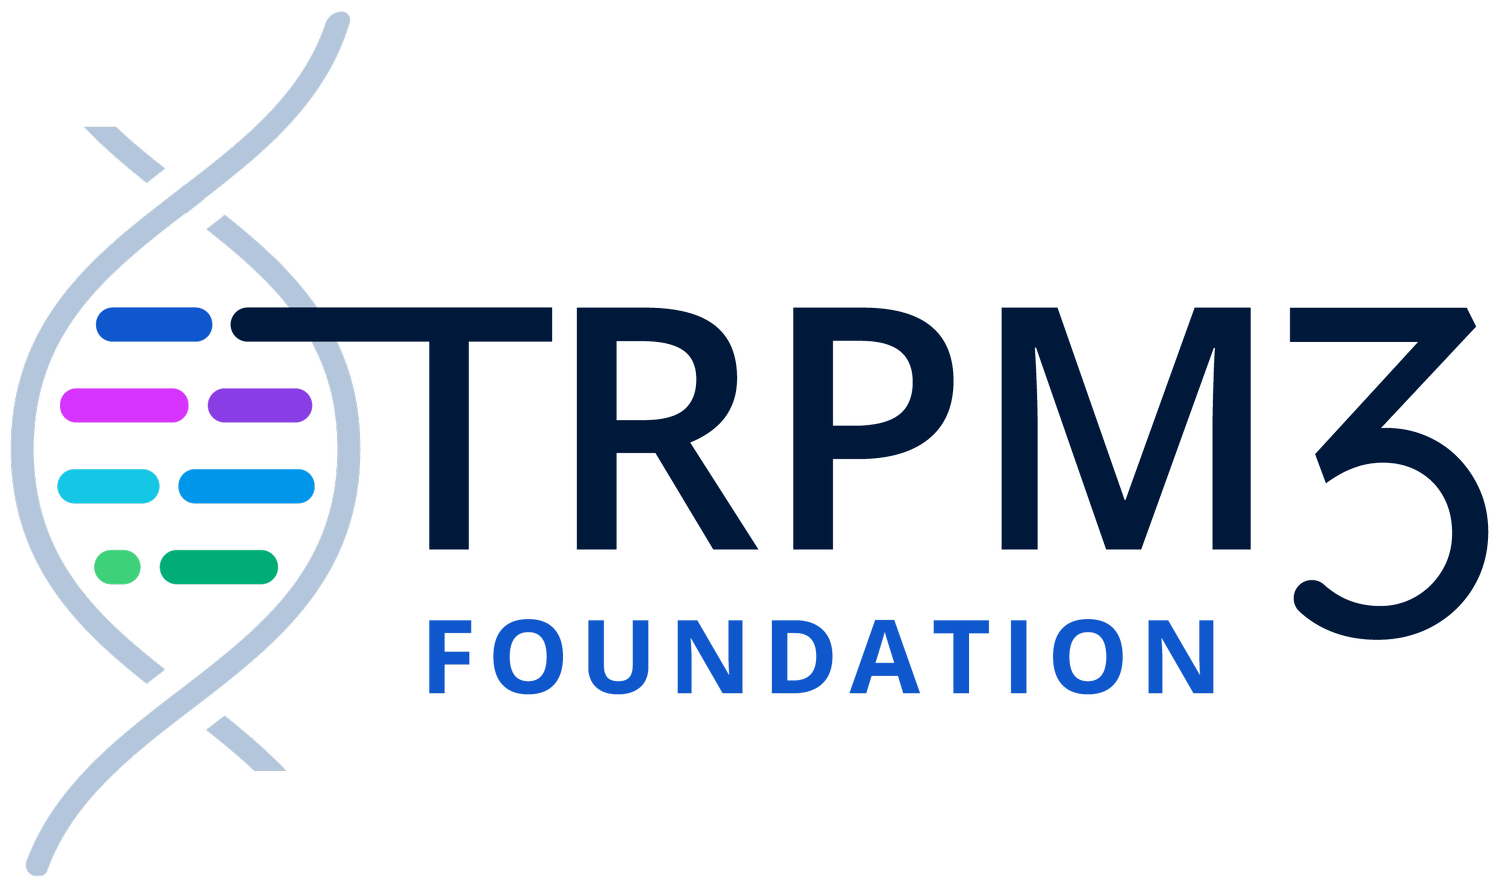 TRPM3 Foundation